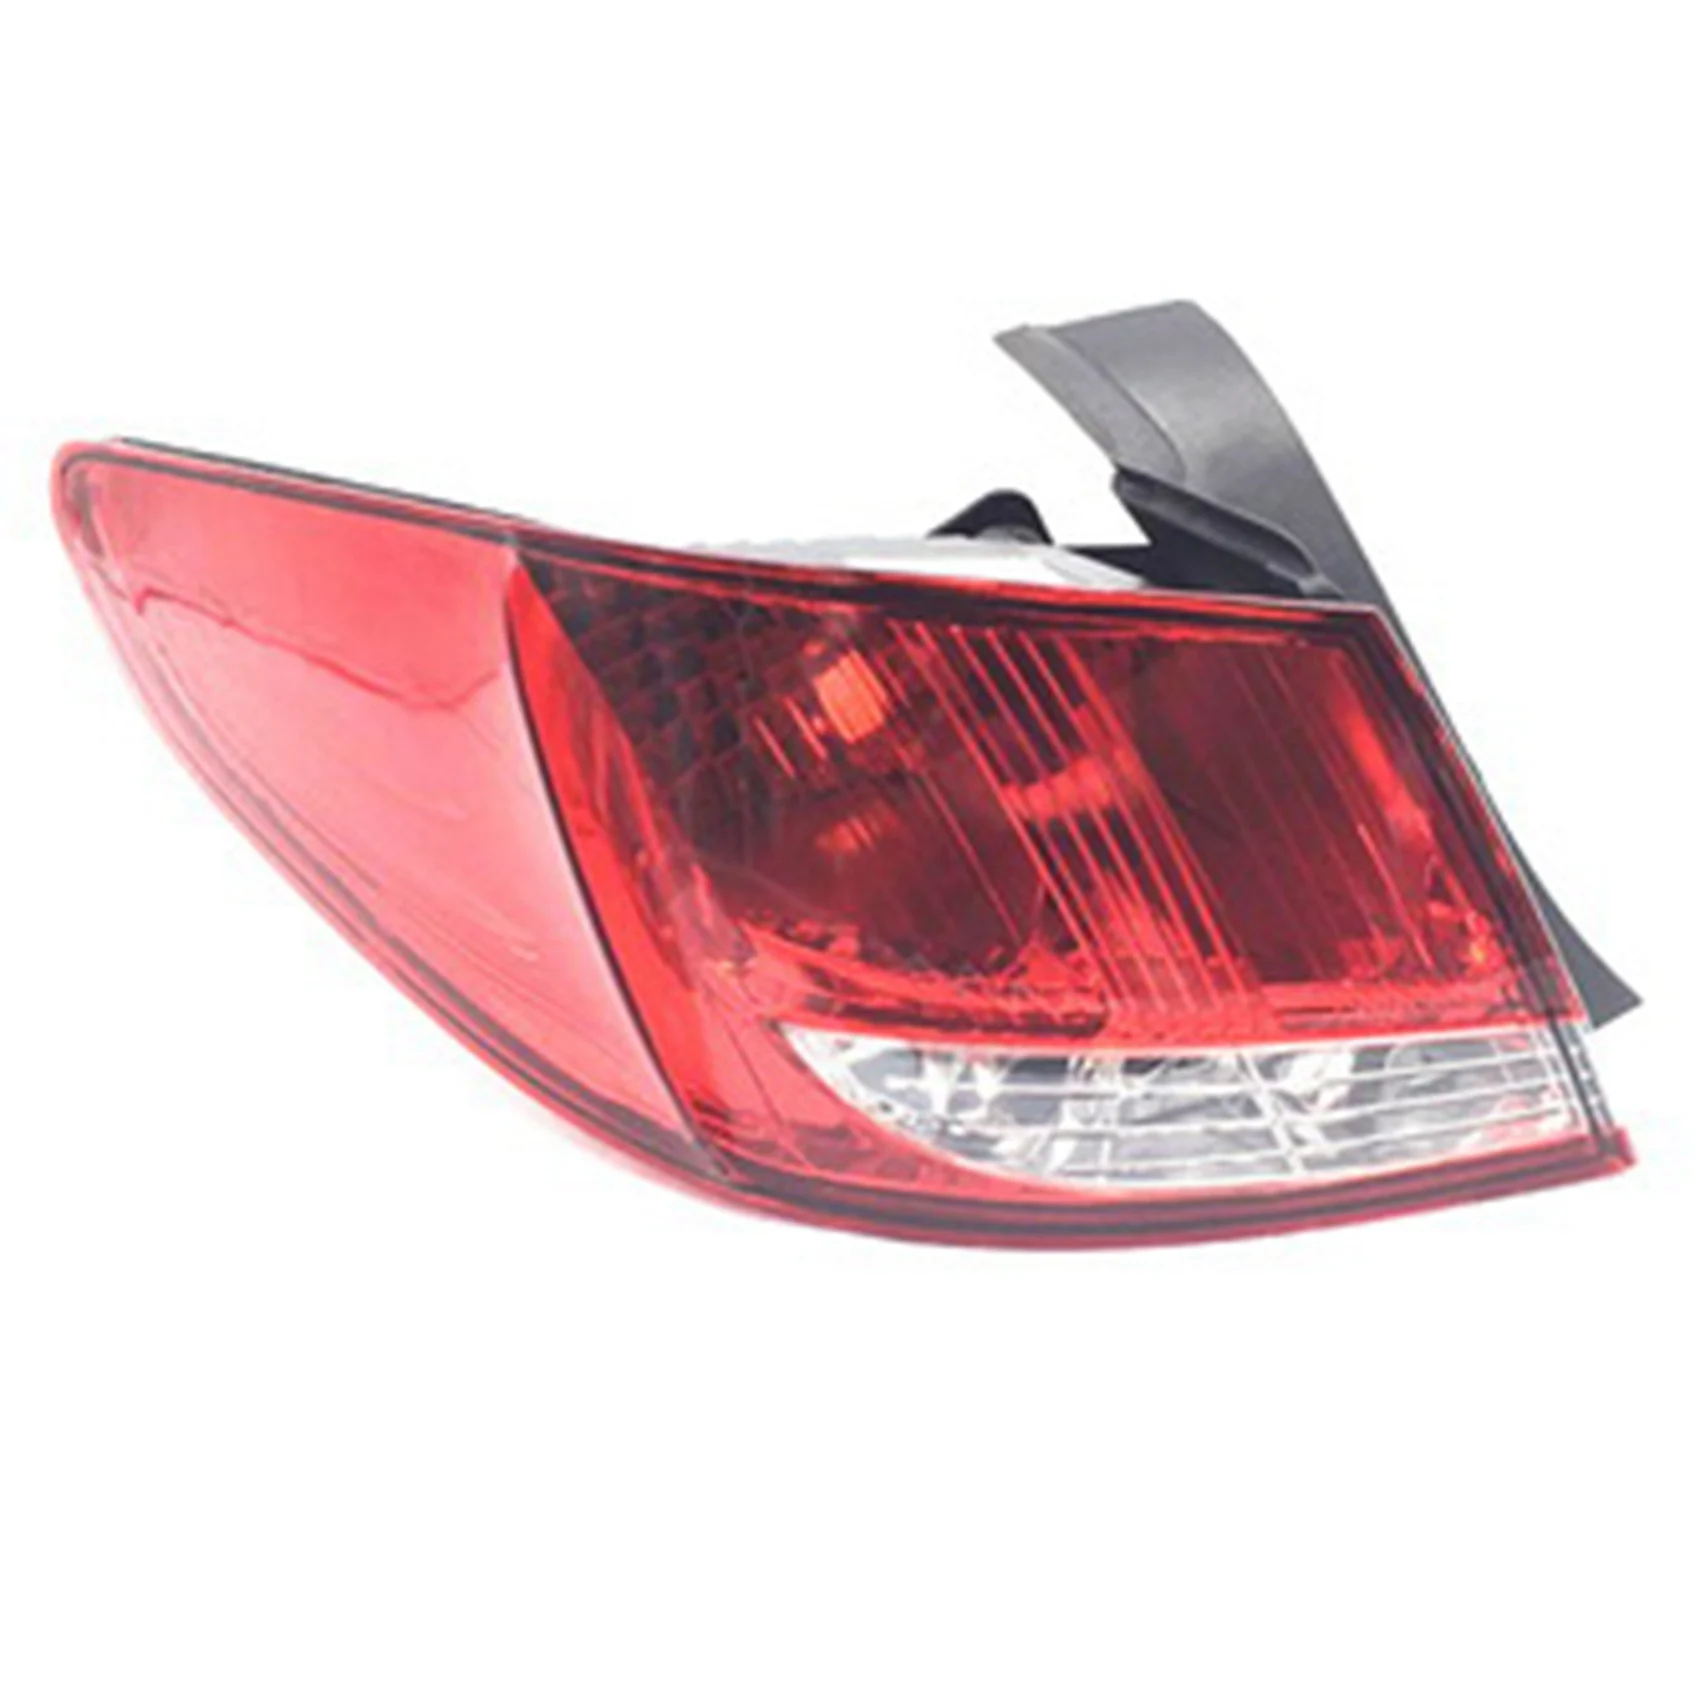 

Car Taillight Rear Light Tail Light Lamp embly for Peugeot 408 2010-2012 Left